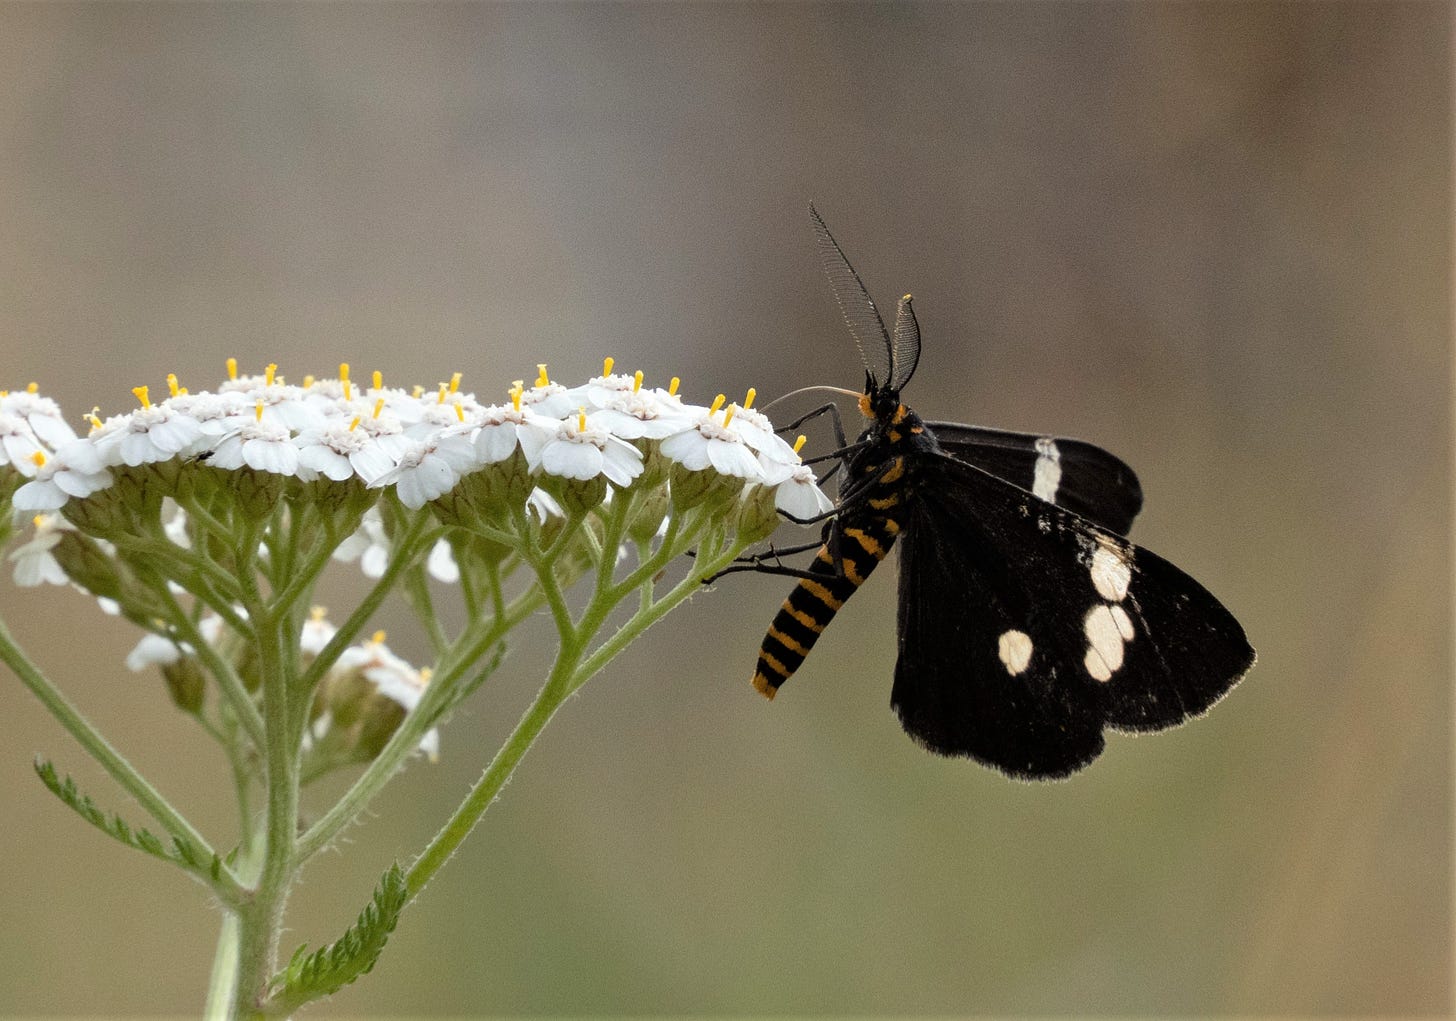 Magpie moth (Nyctemera annulata, endemic) feeding on introduced yarrow flower in a New Zealand (Otago) garden.